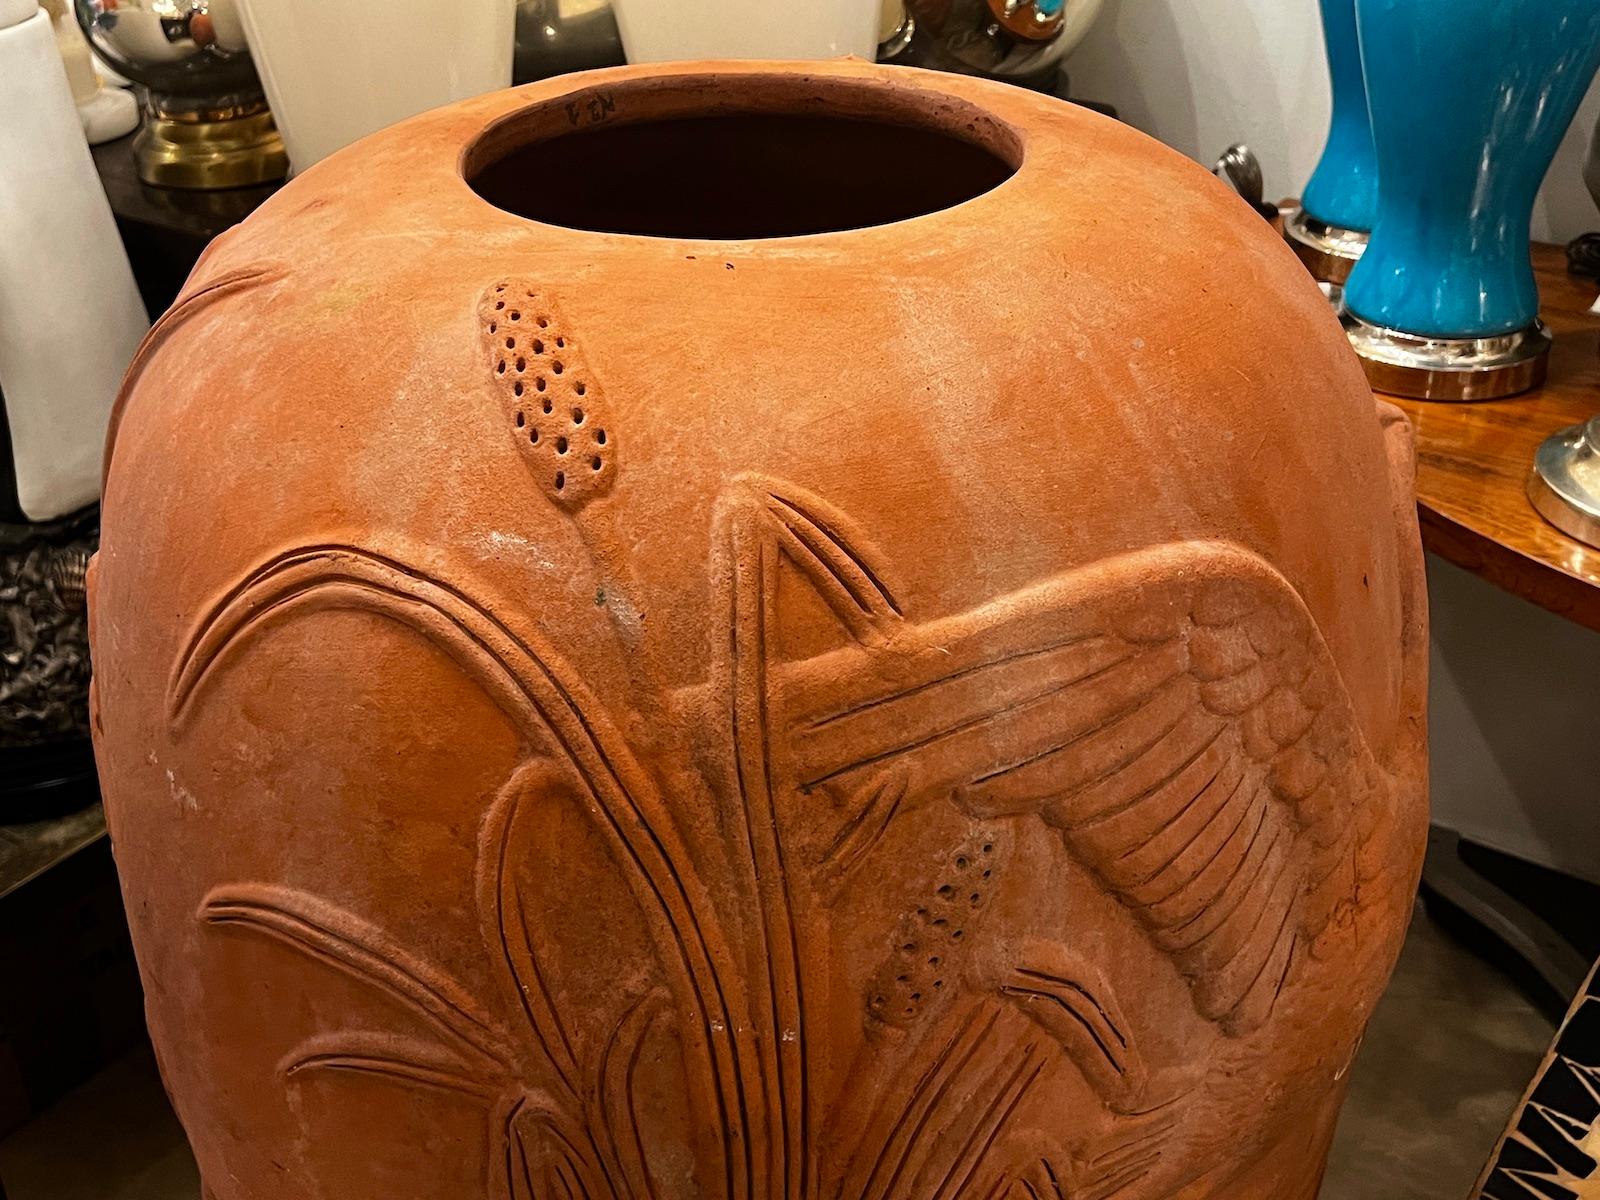 A large Italian circa 1950's terracotta garden vase.

Measurements:
Height: 38